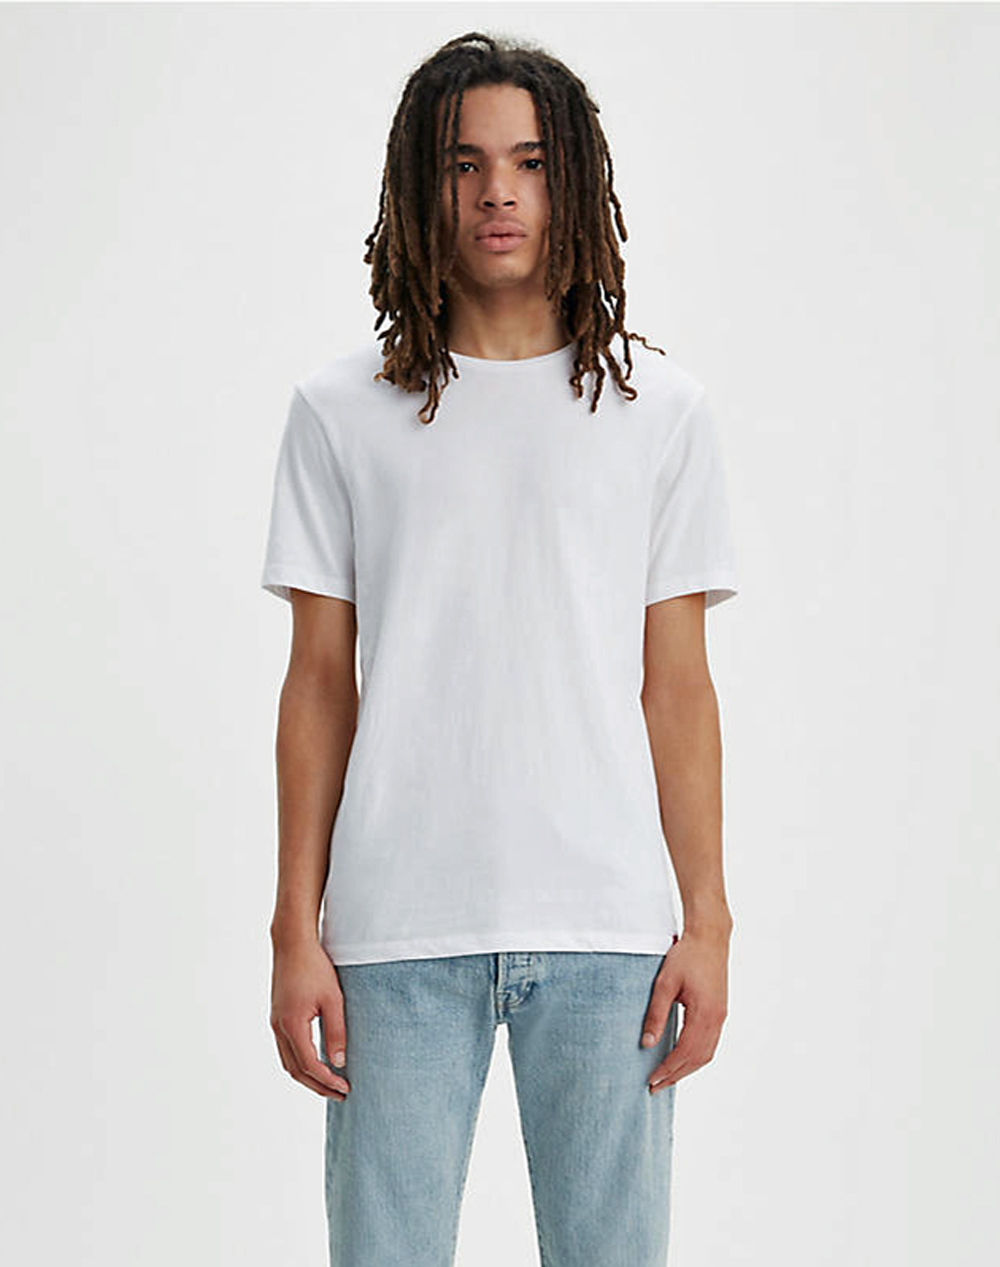 Levi's samarreta d'home bàsica màniga curta 79541-0000 blanca